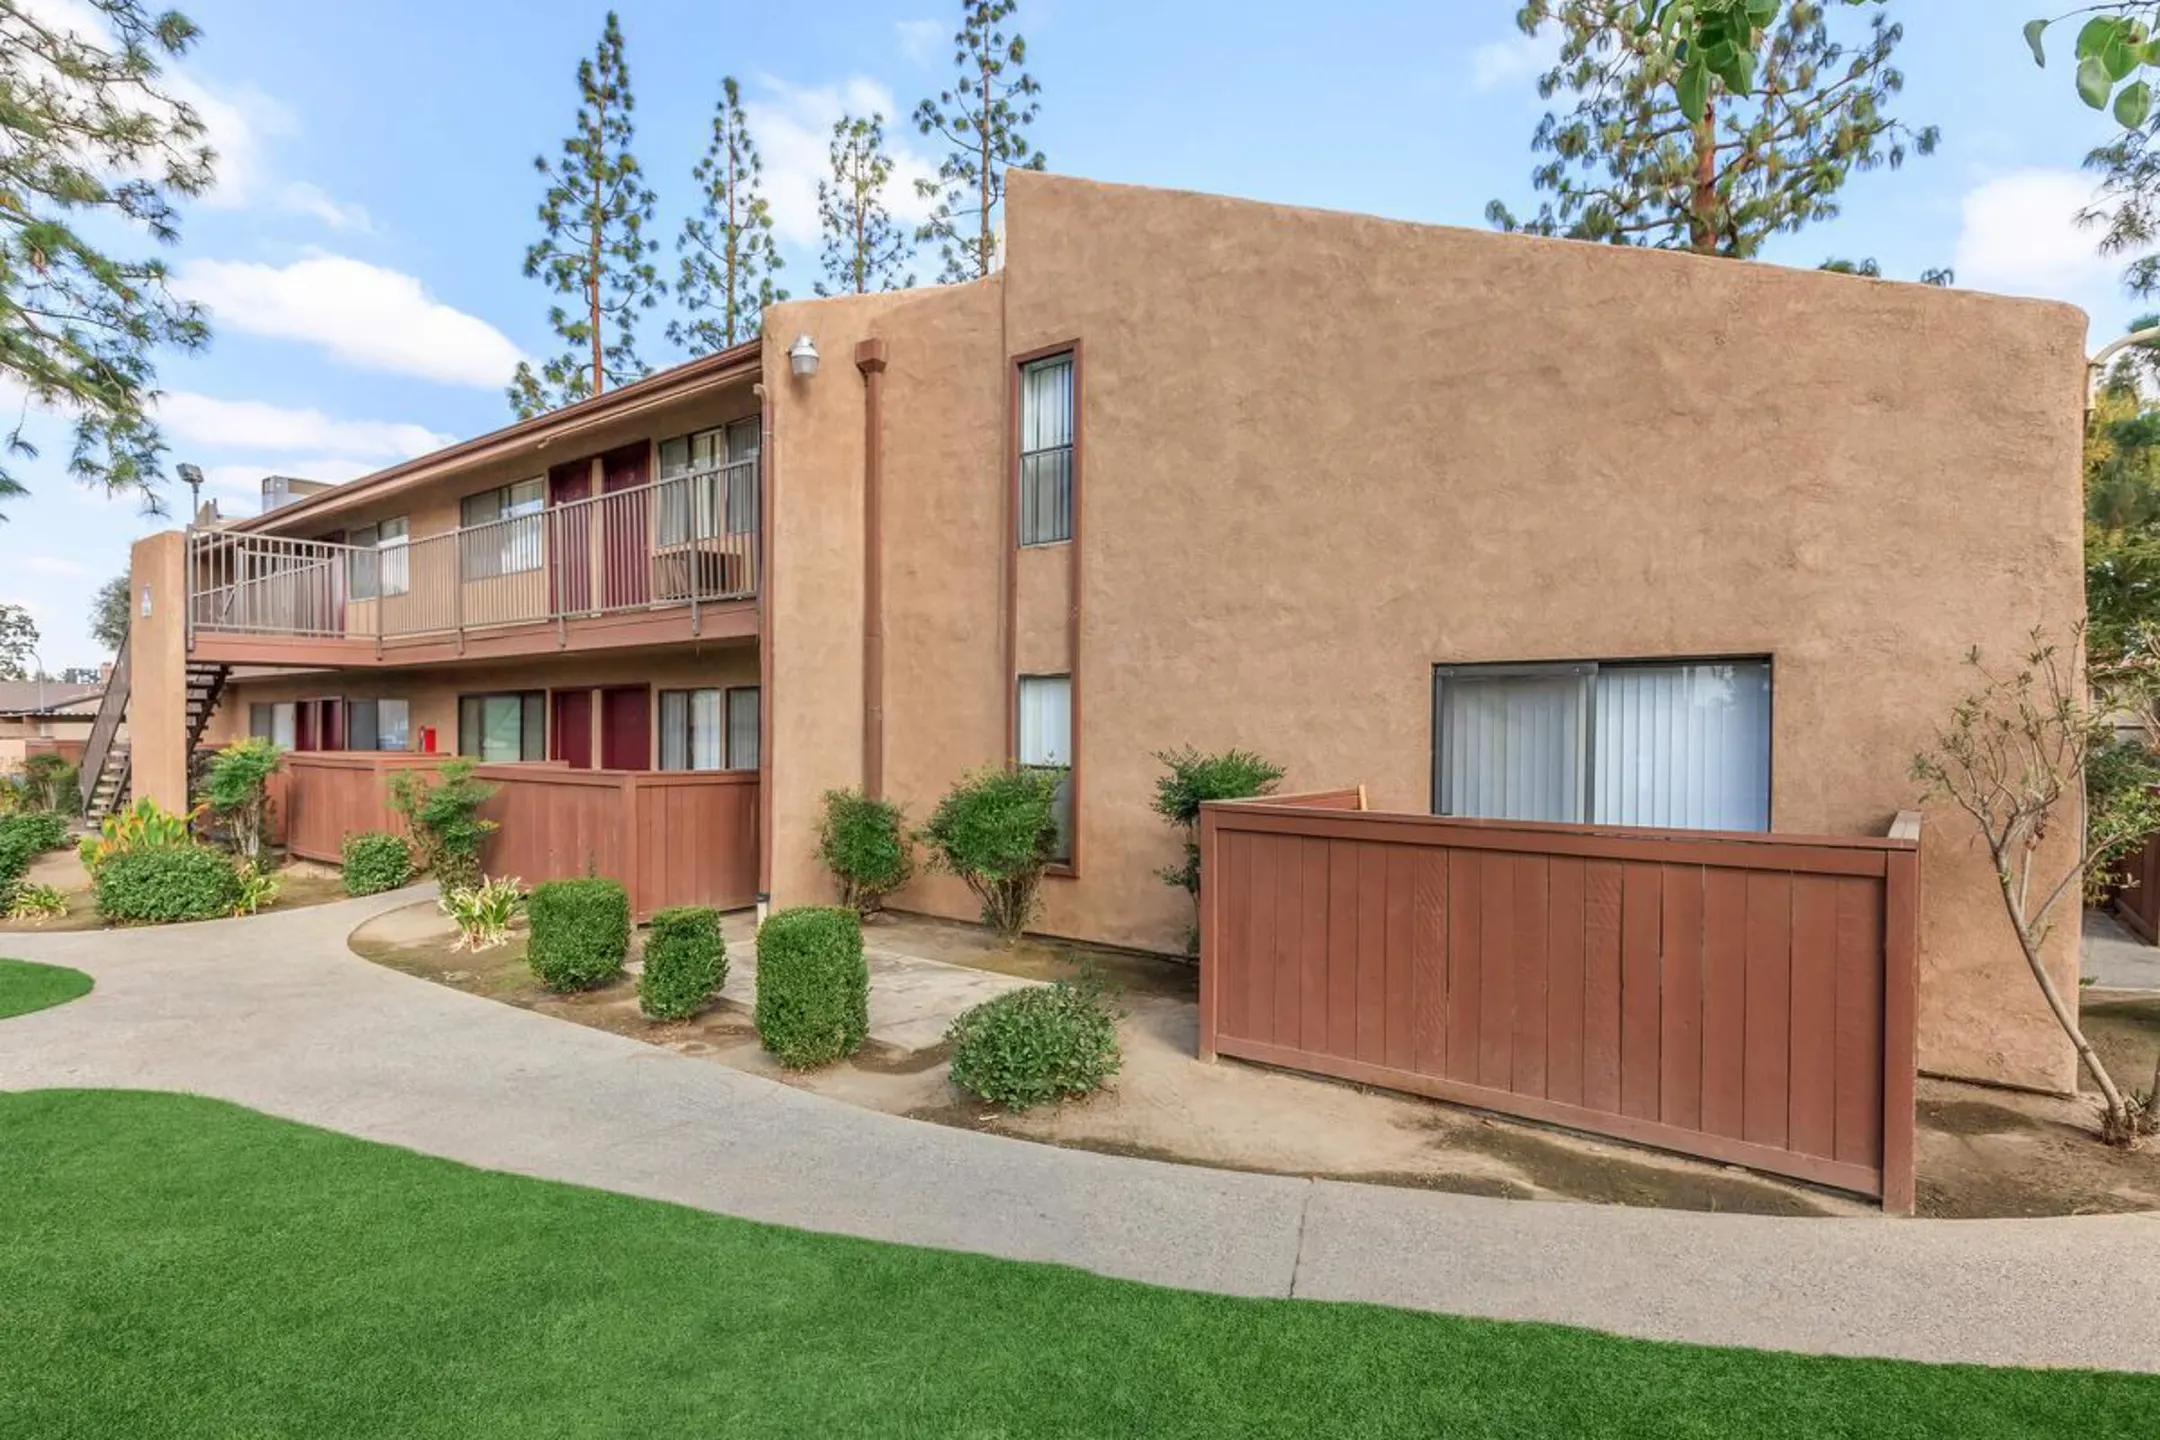 Building - Pacific Terrace Apartments - Bakersfield, CA